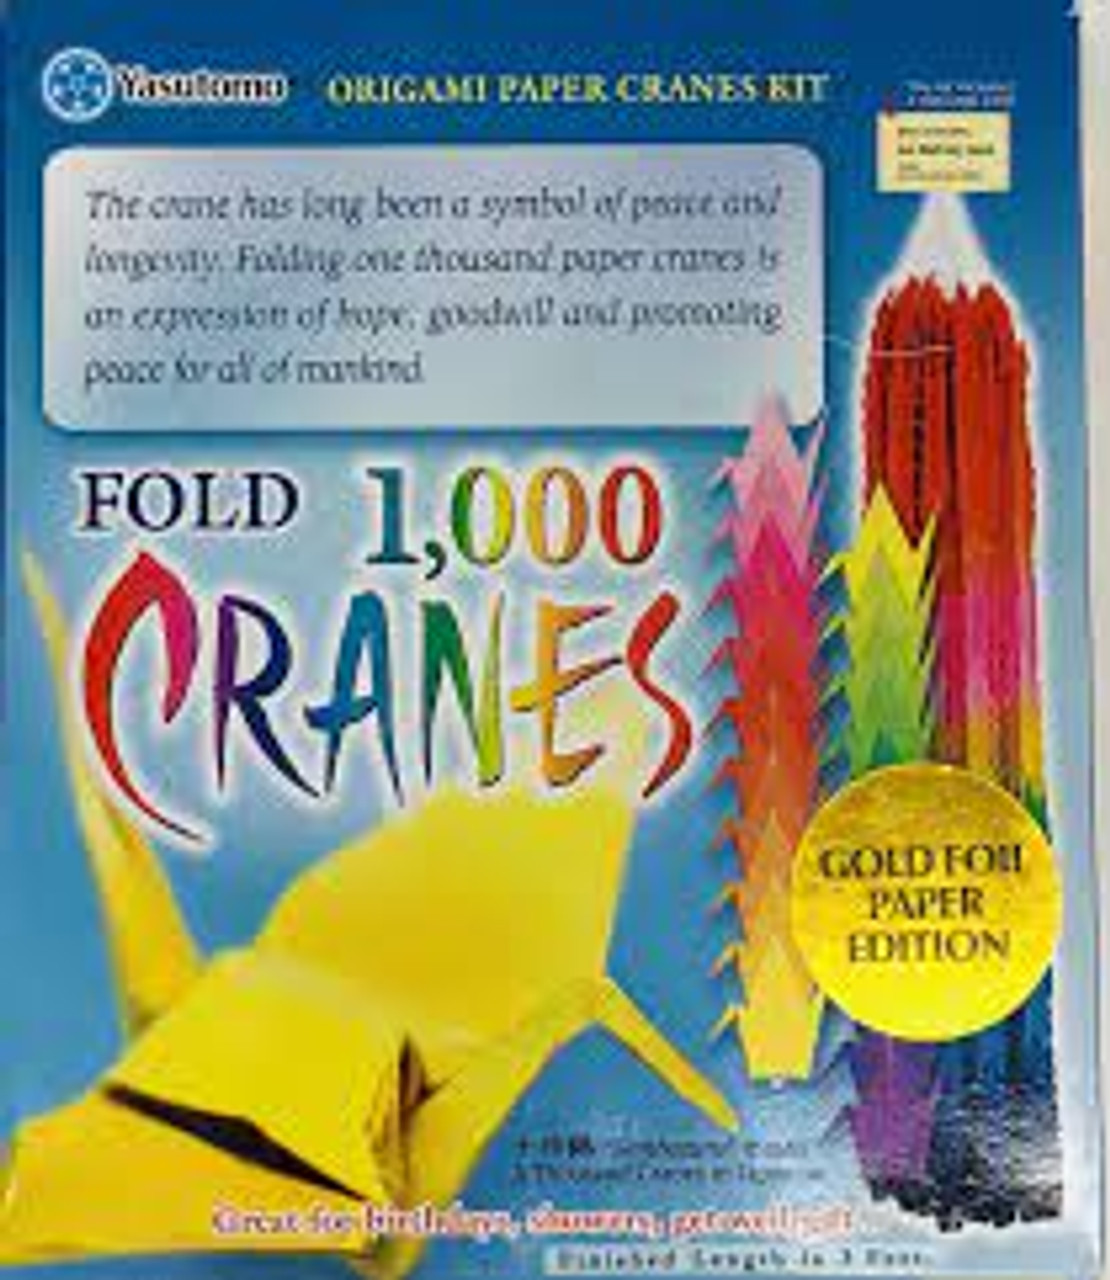 1,000 Cranes Gold Foil Origami Kit